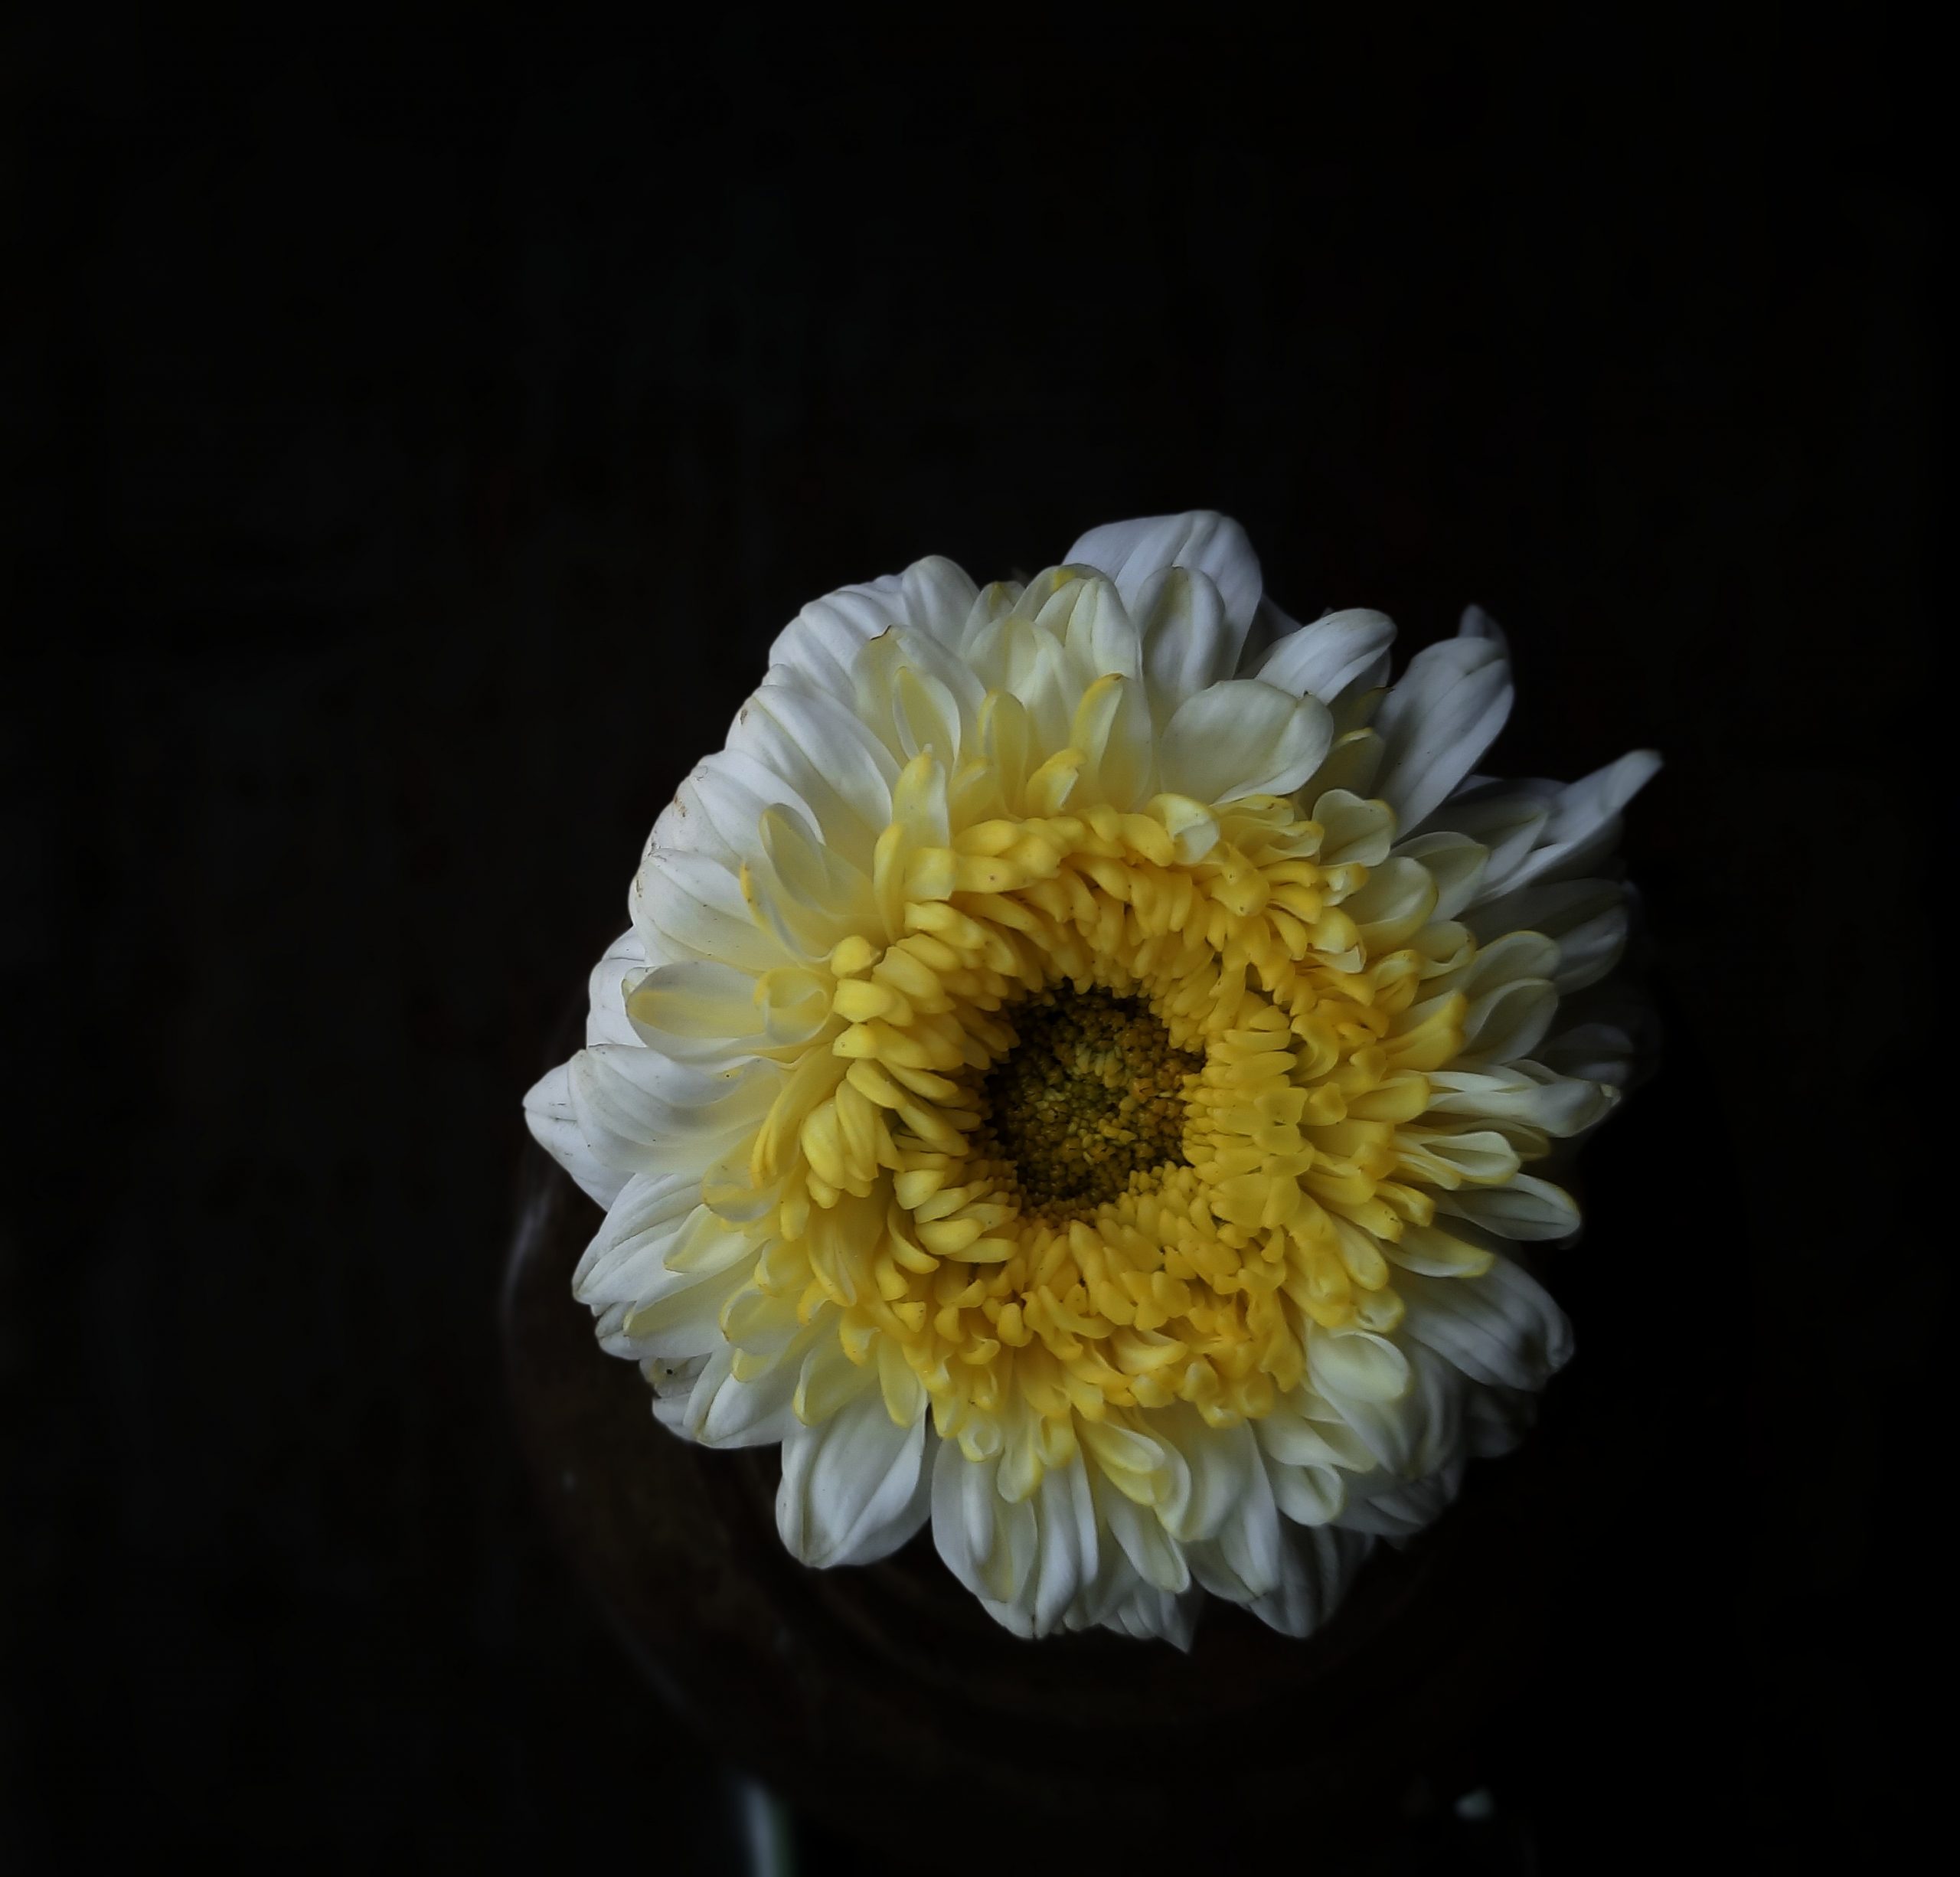 Marigold white flower